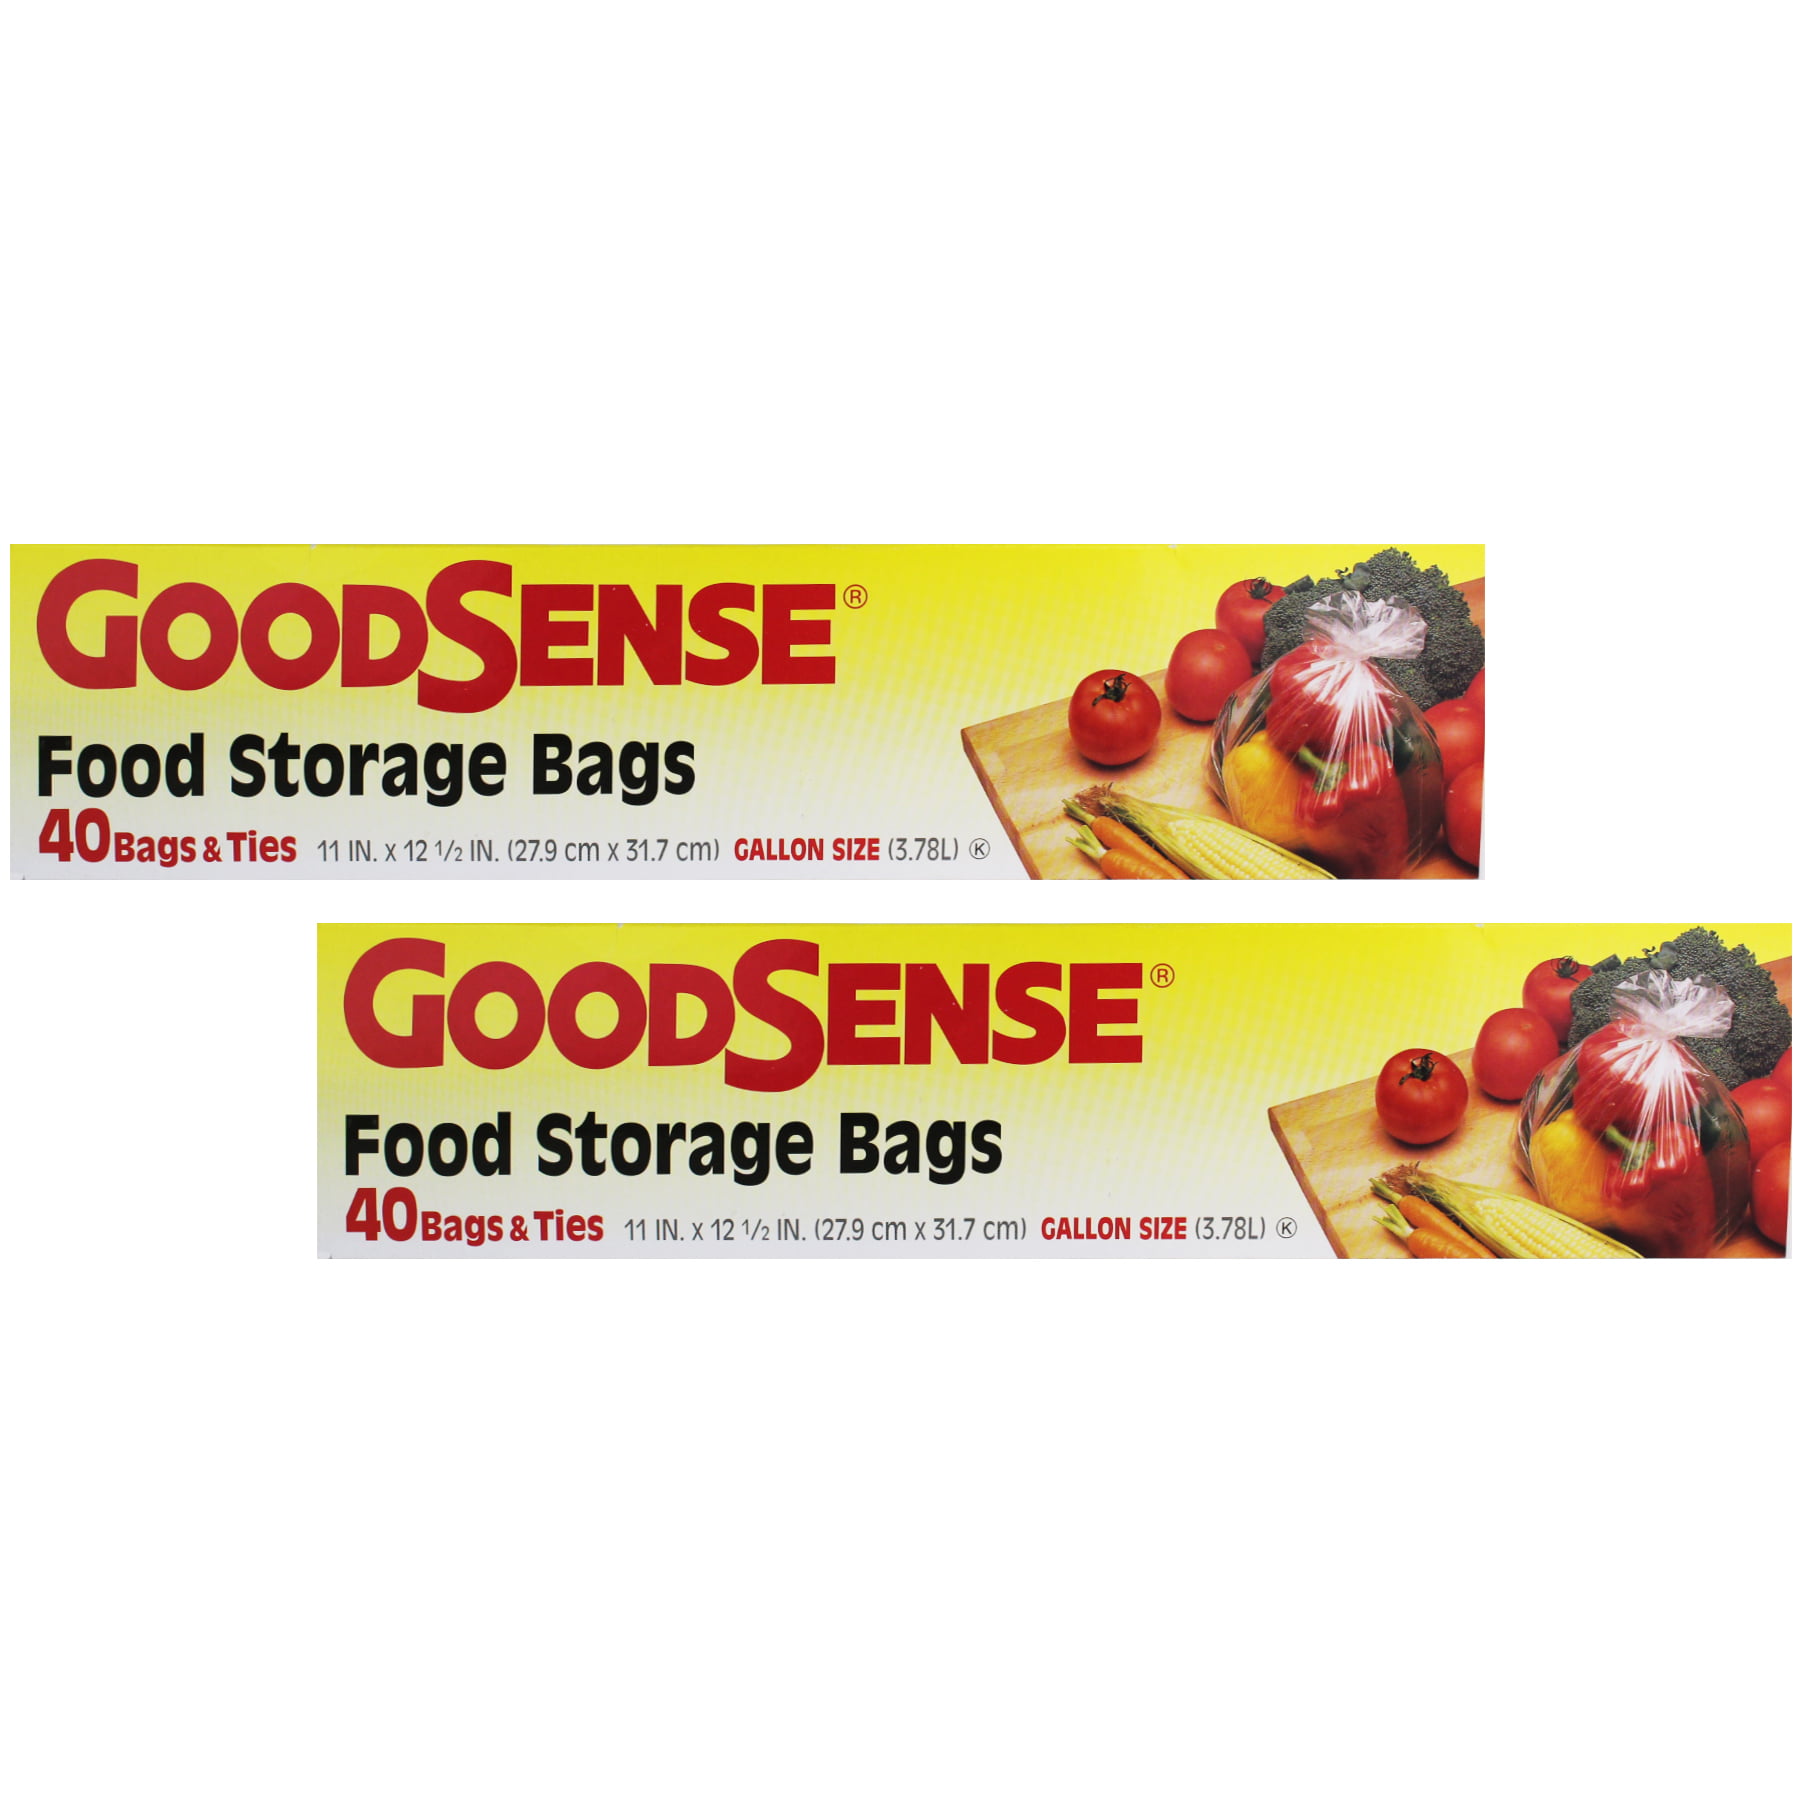 The Best Food Storage Bags